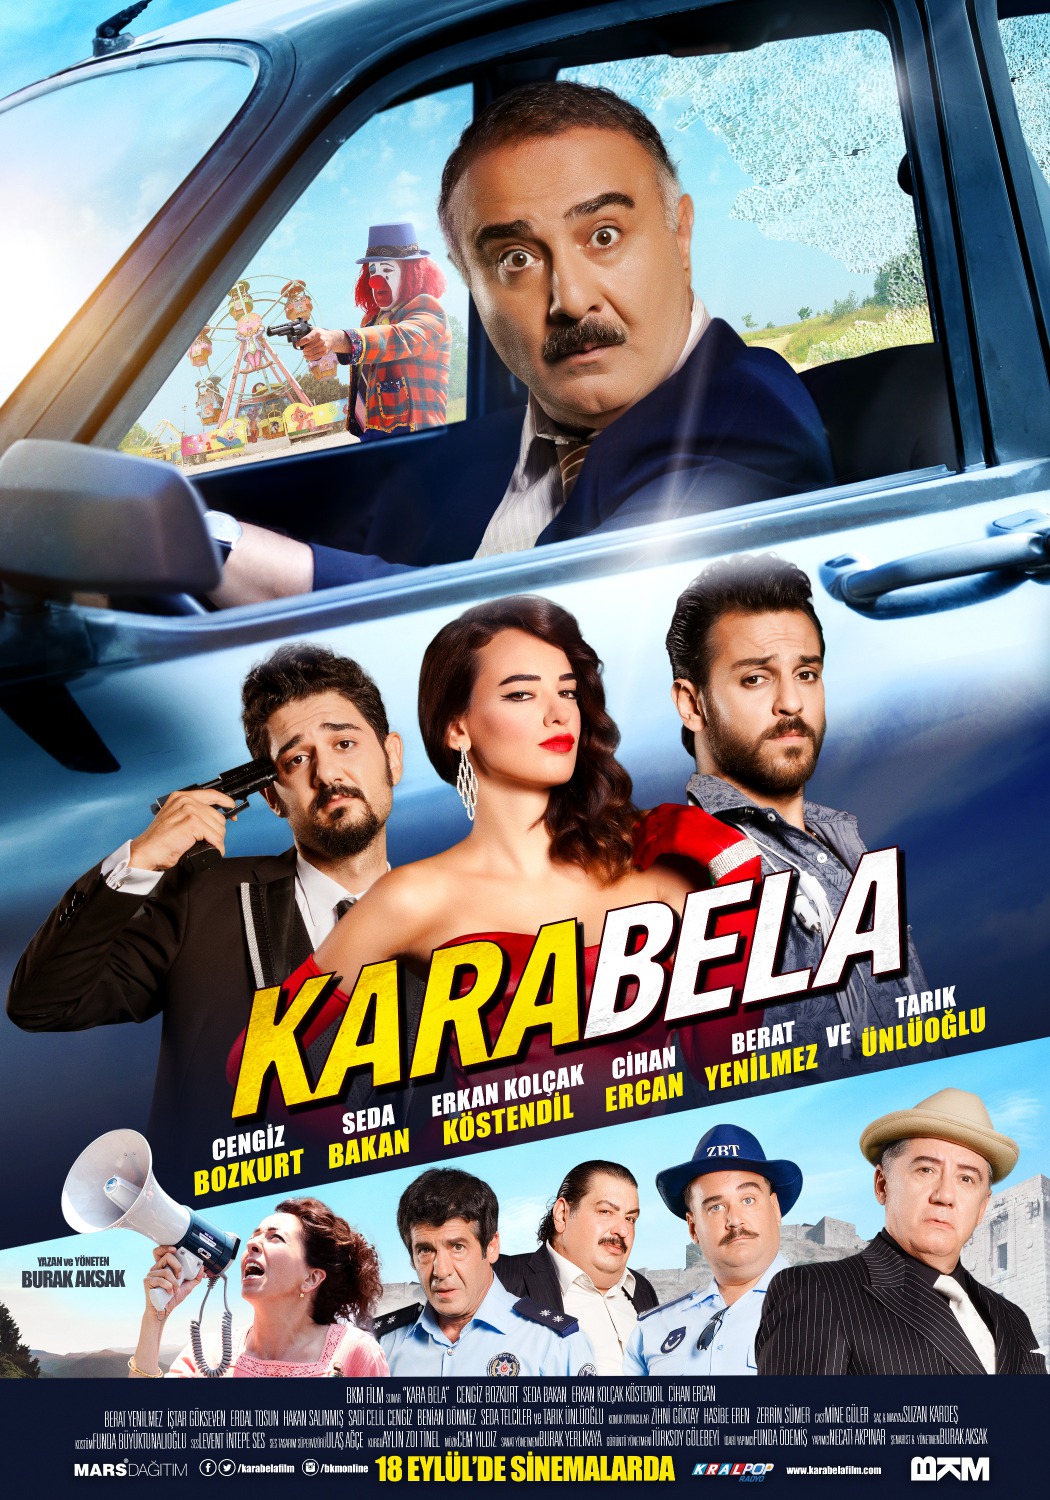 Extra Large Movie Poster Image for Kara Bela 